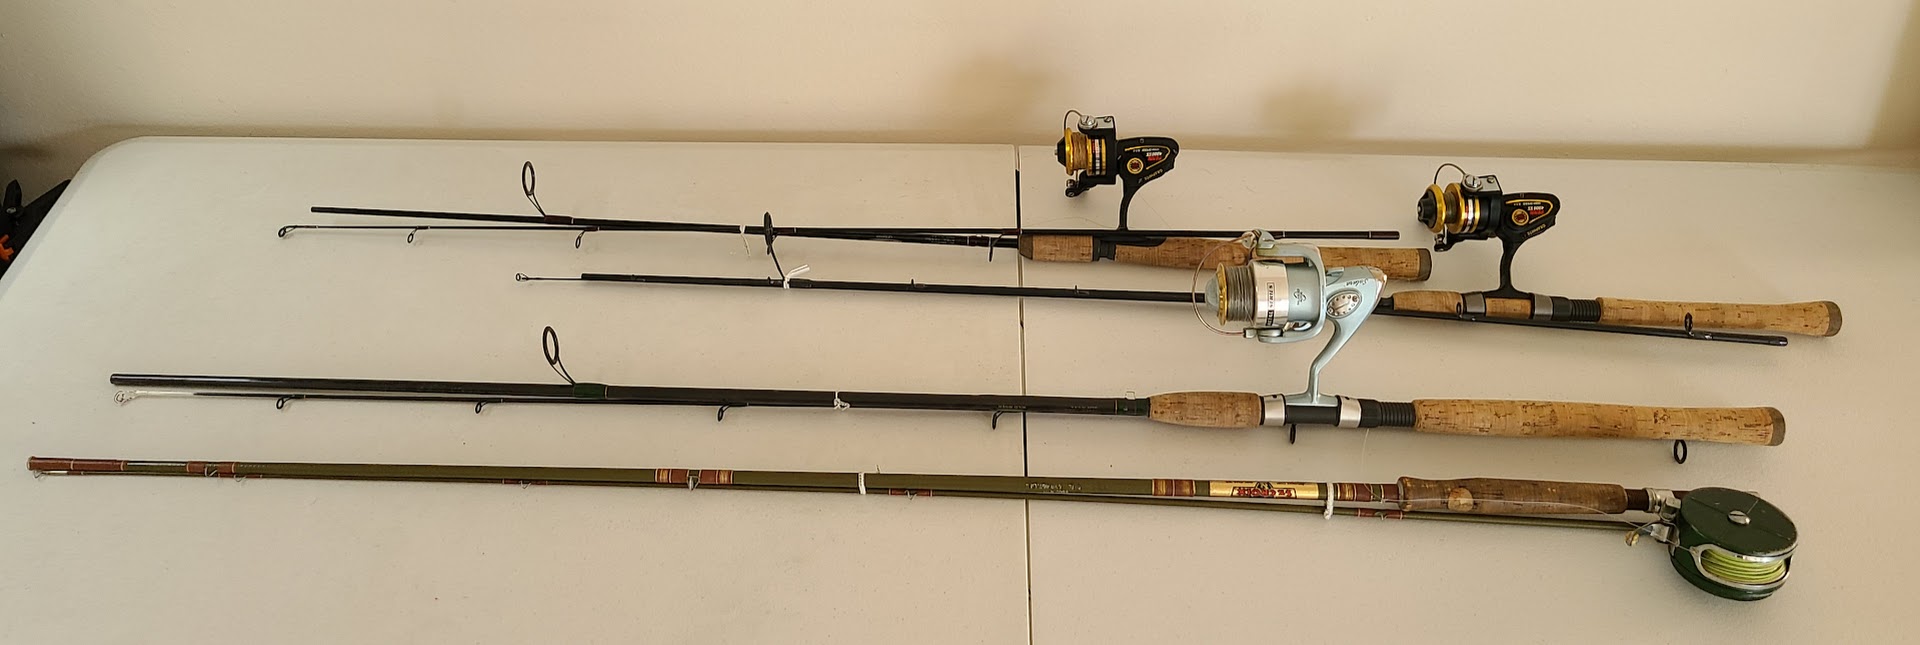 St-Croix-fishing-rods